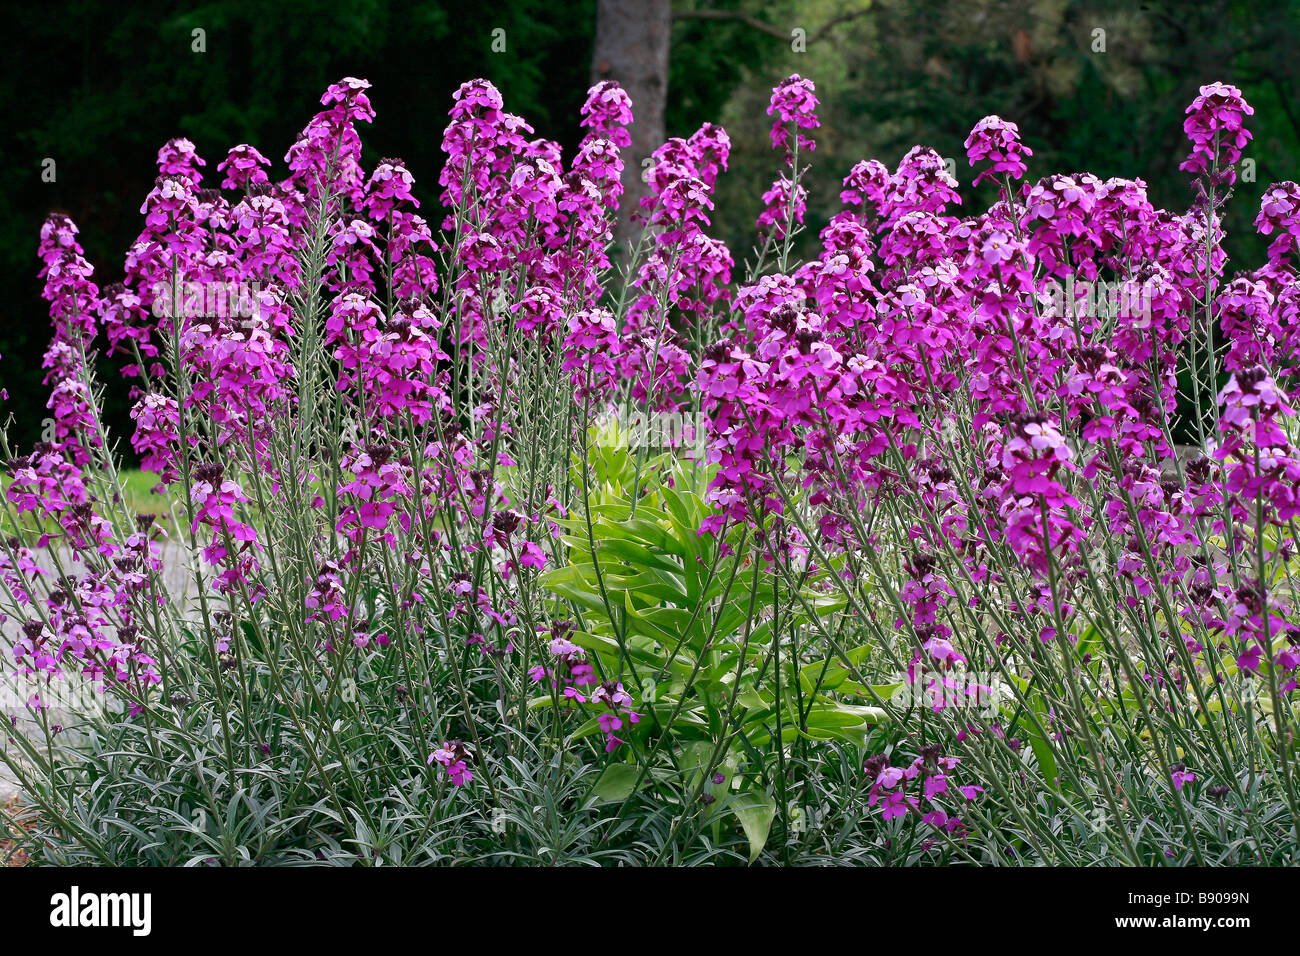 Erysimum linifolium "Bowles Mauve" Stock Photo